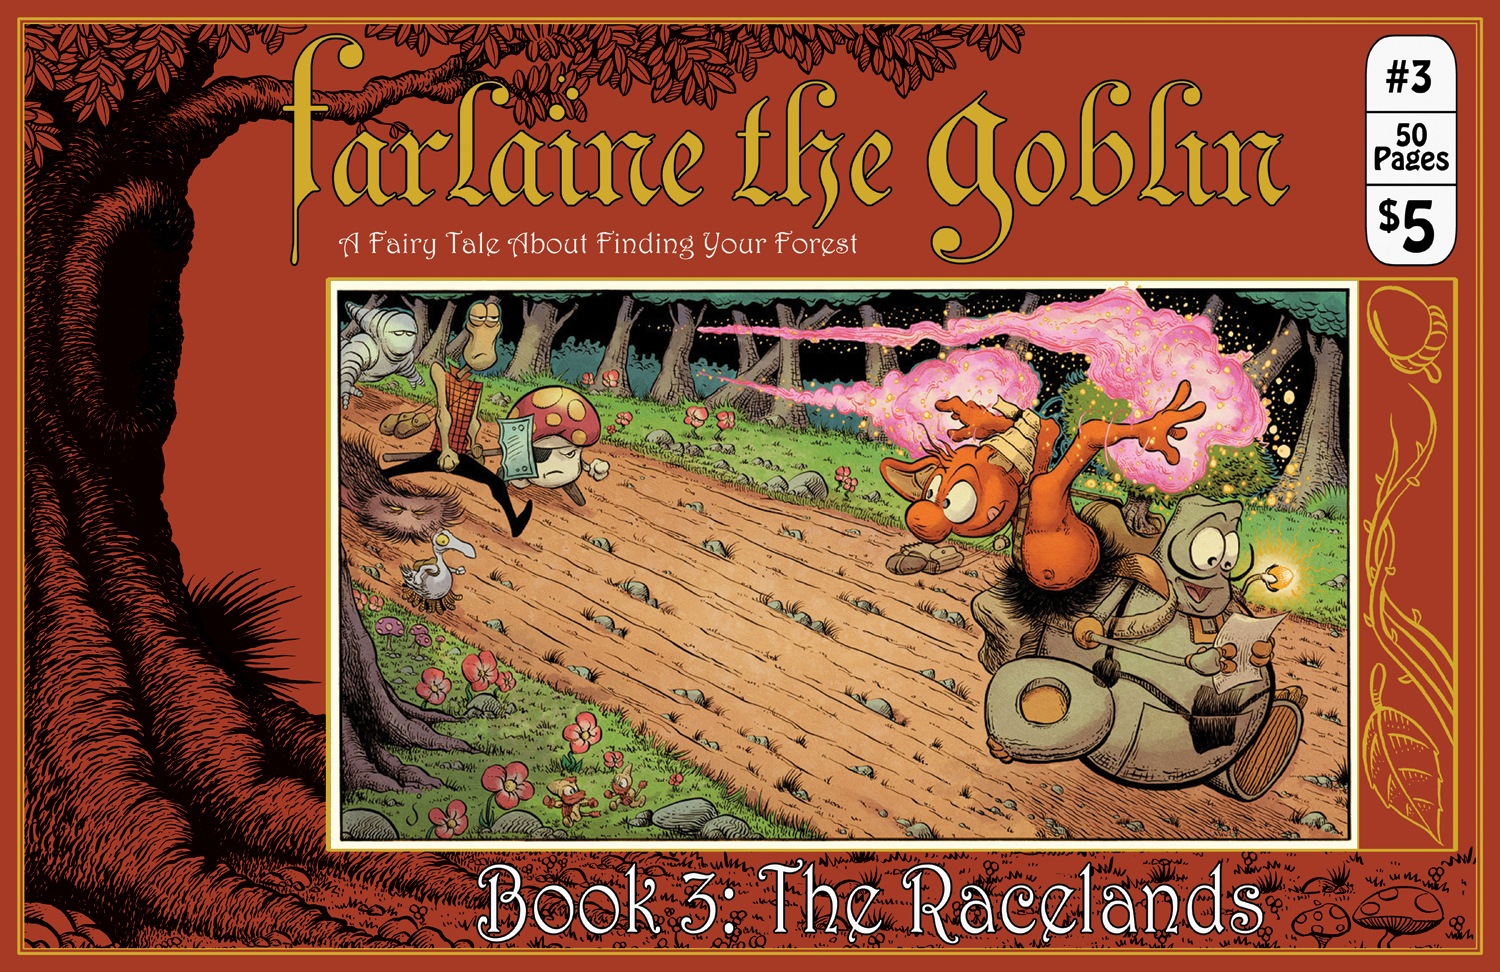 No Ordinary Fairy Tale: An Interview With Farlaine The Goblin’s Creator